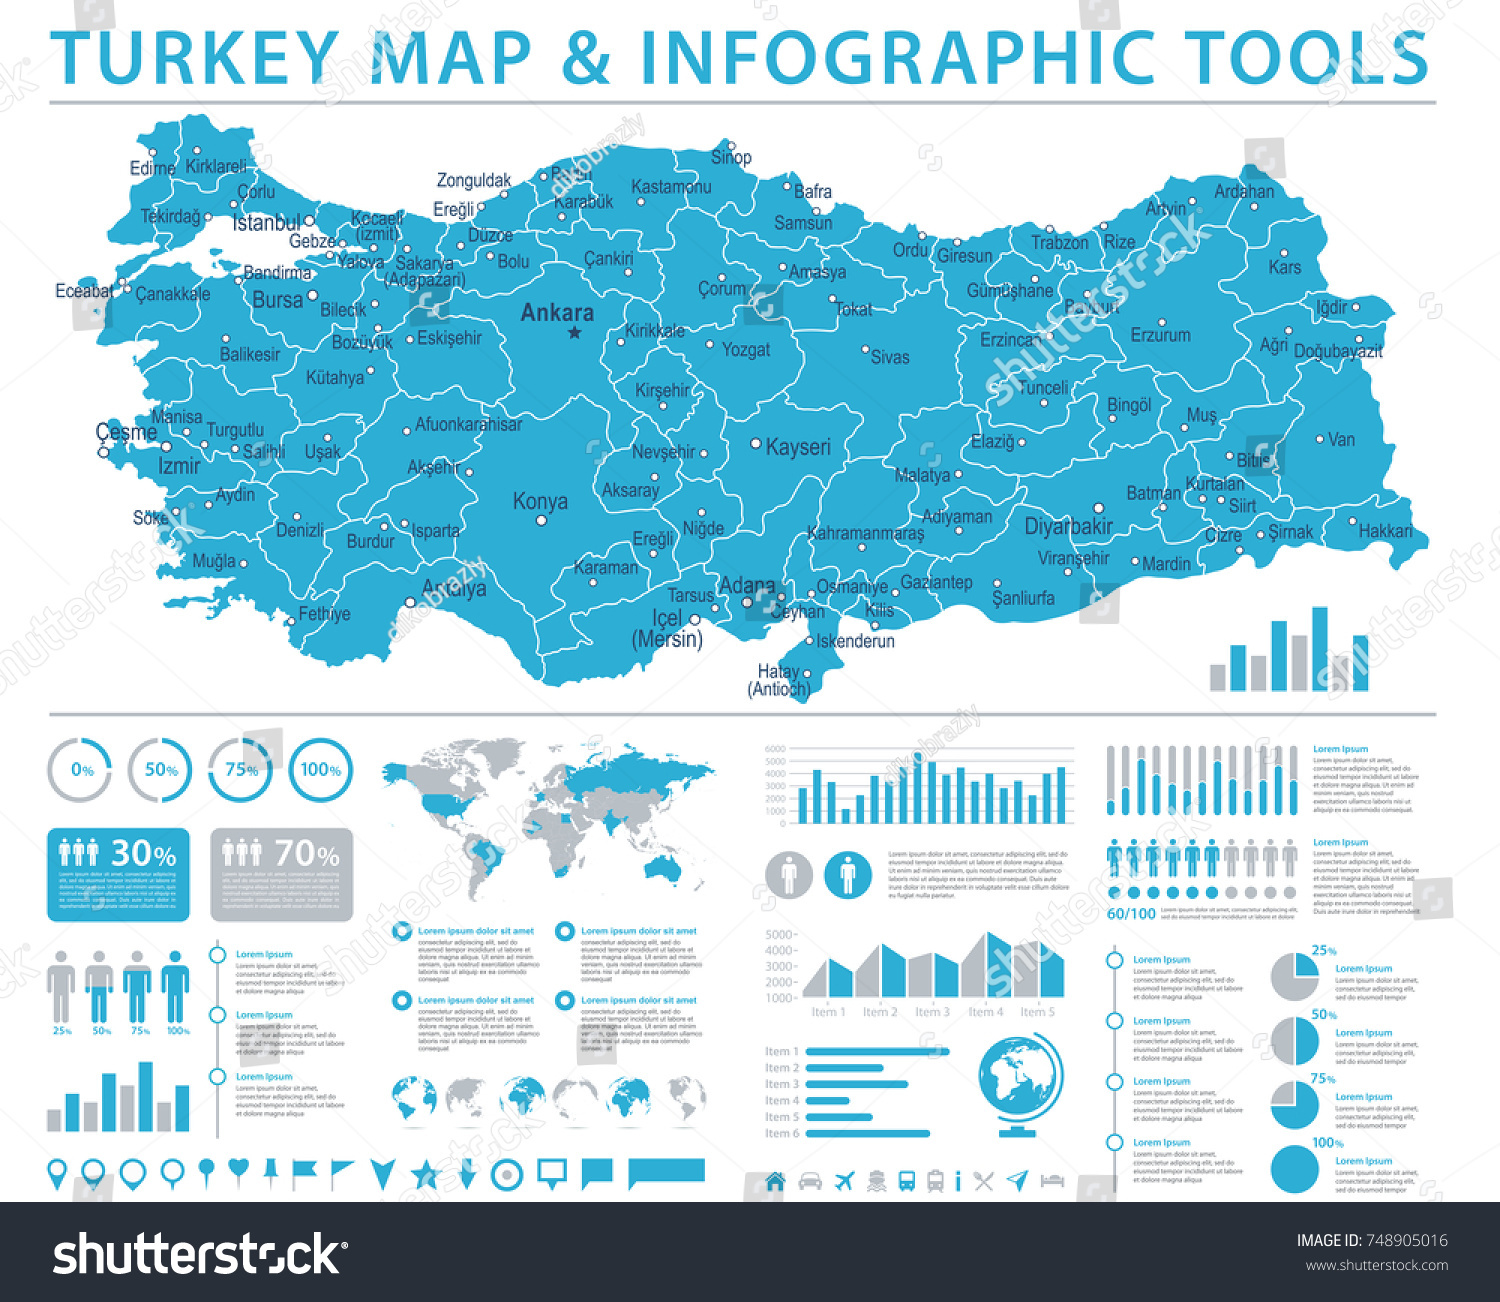 SVG of Turkey Map - Detailed Info Graphic Vector Illustration svg